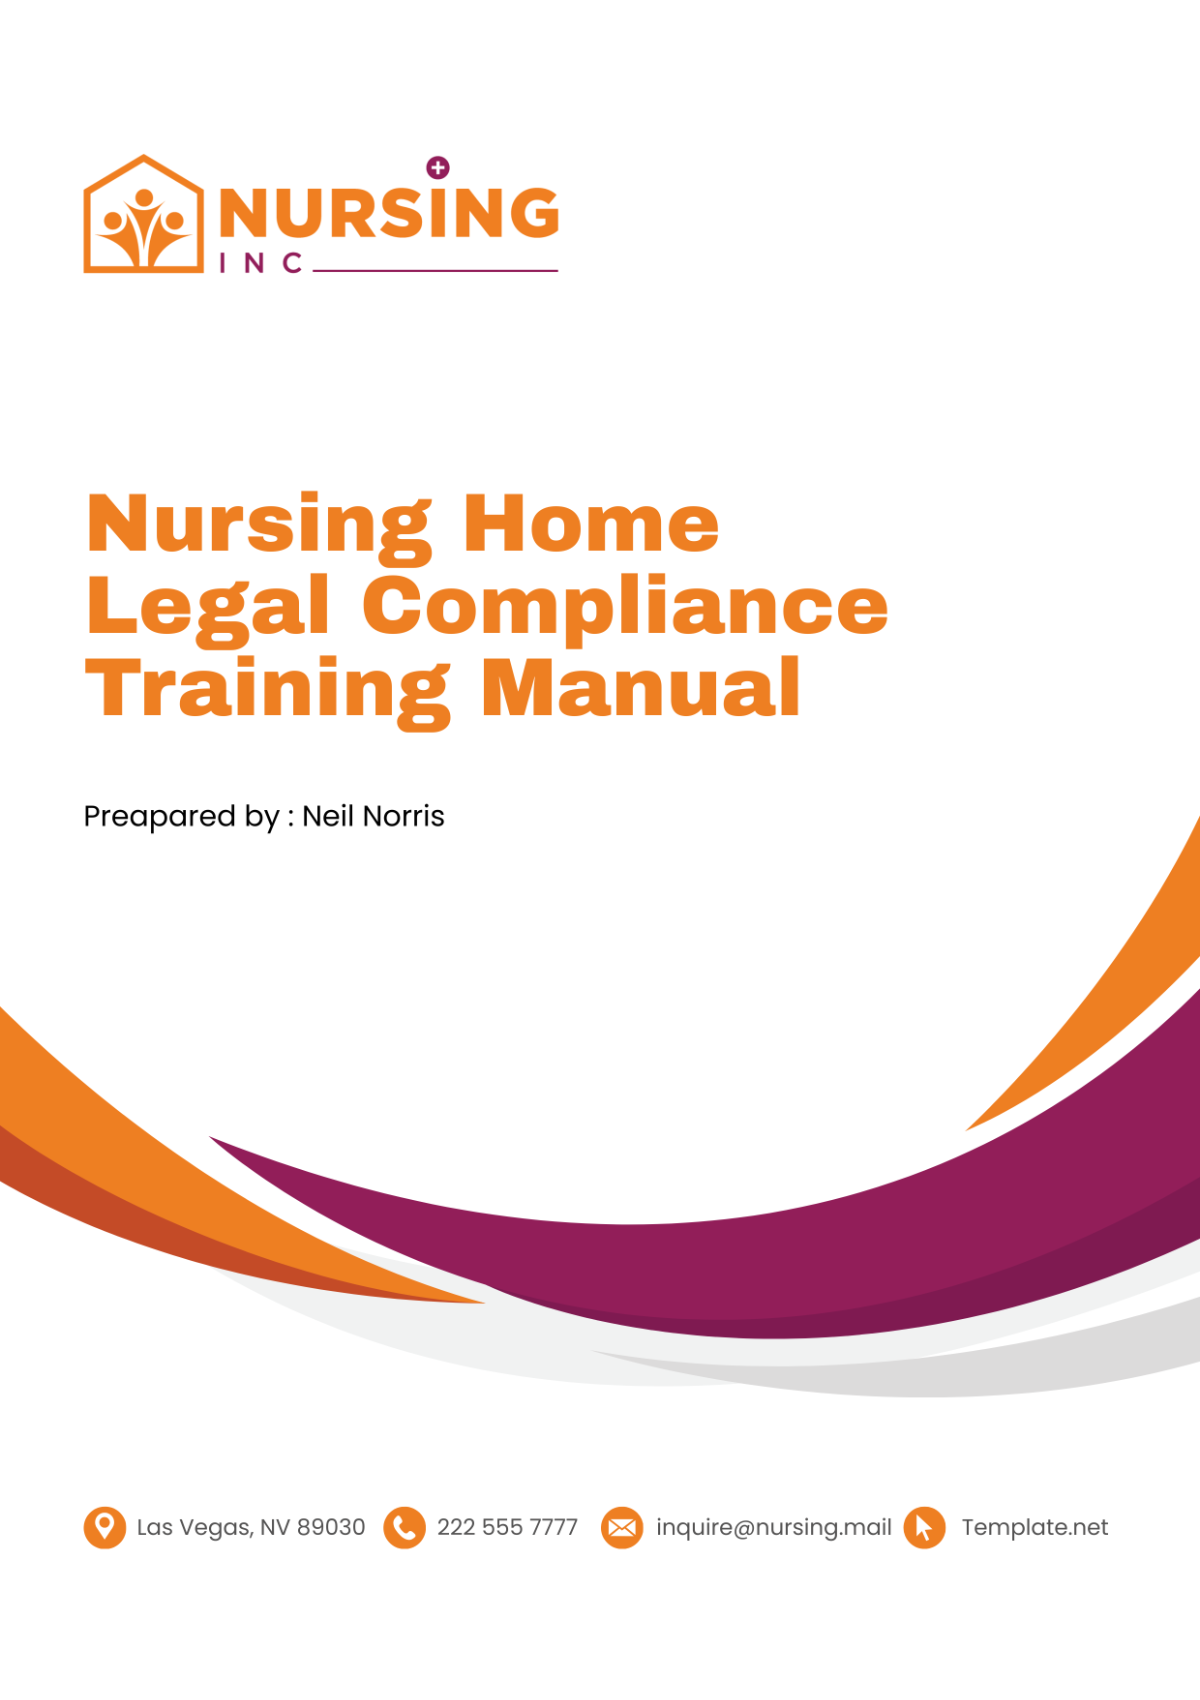 Nursing Home Legal Compliance Training Manual Template